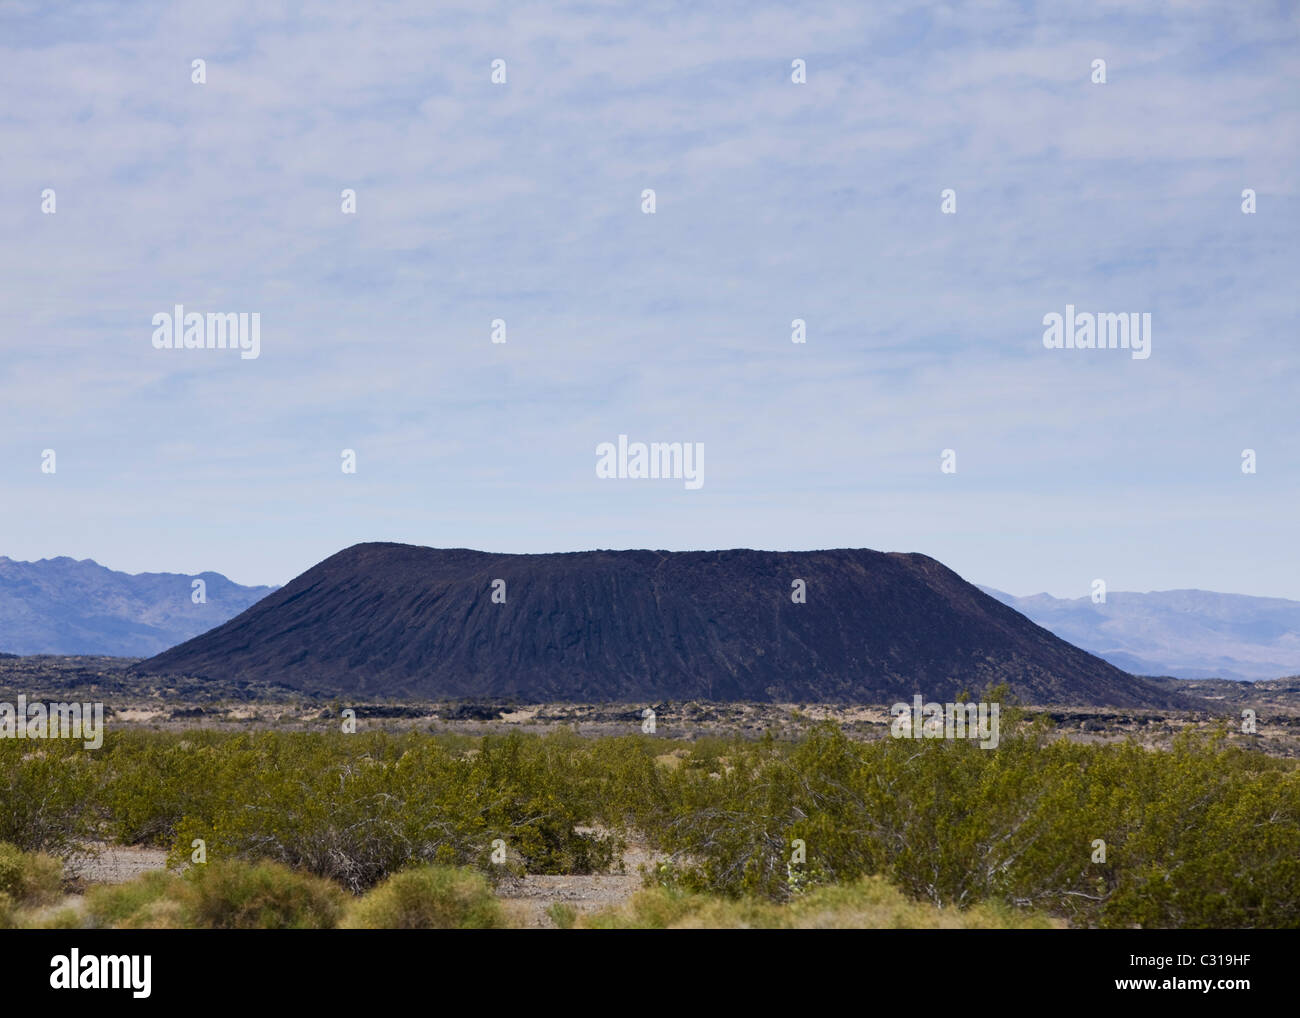 Inaktive Lava-Dome in Südkalifornien Wüstenlandschaft Stockfoto